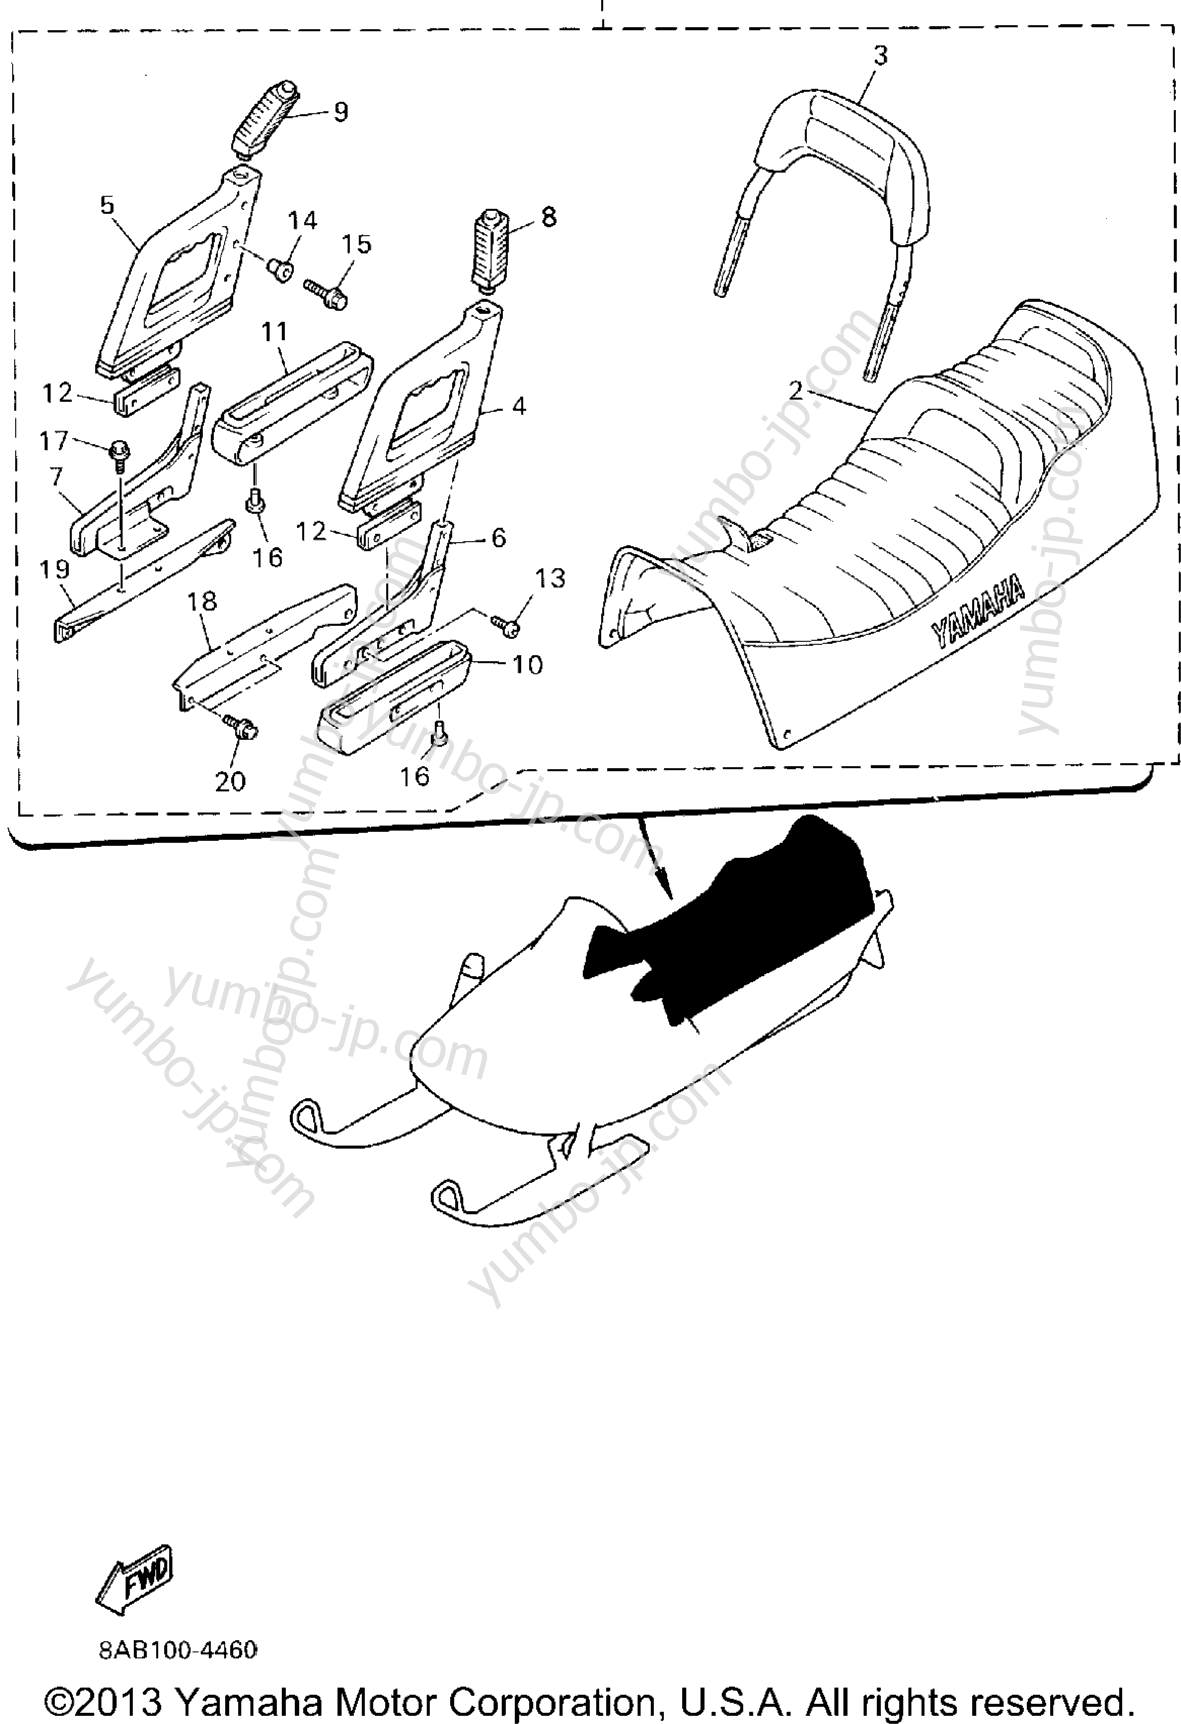 2-Up Seat Kit (Alternate) for snowmobiles YAMAHA VMAX 600 (VX600U) 1994 year